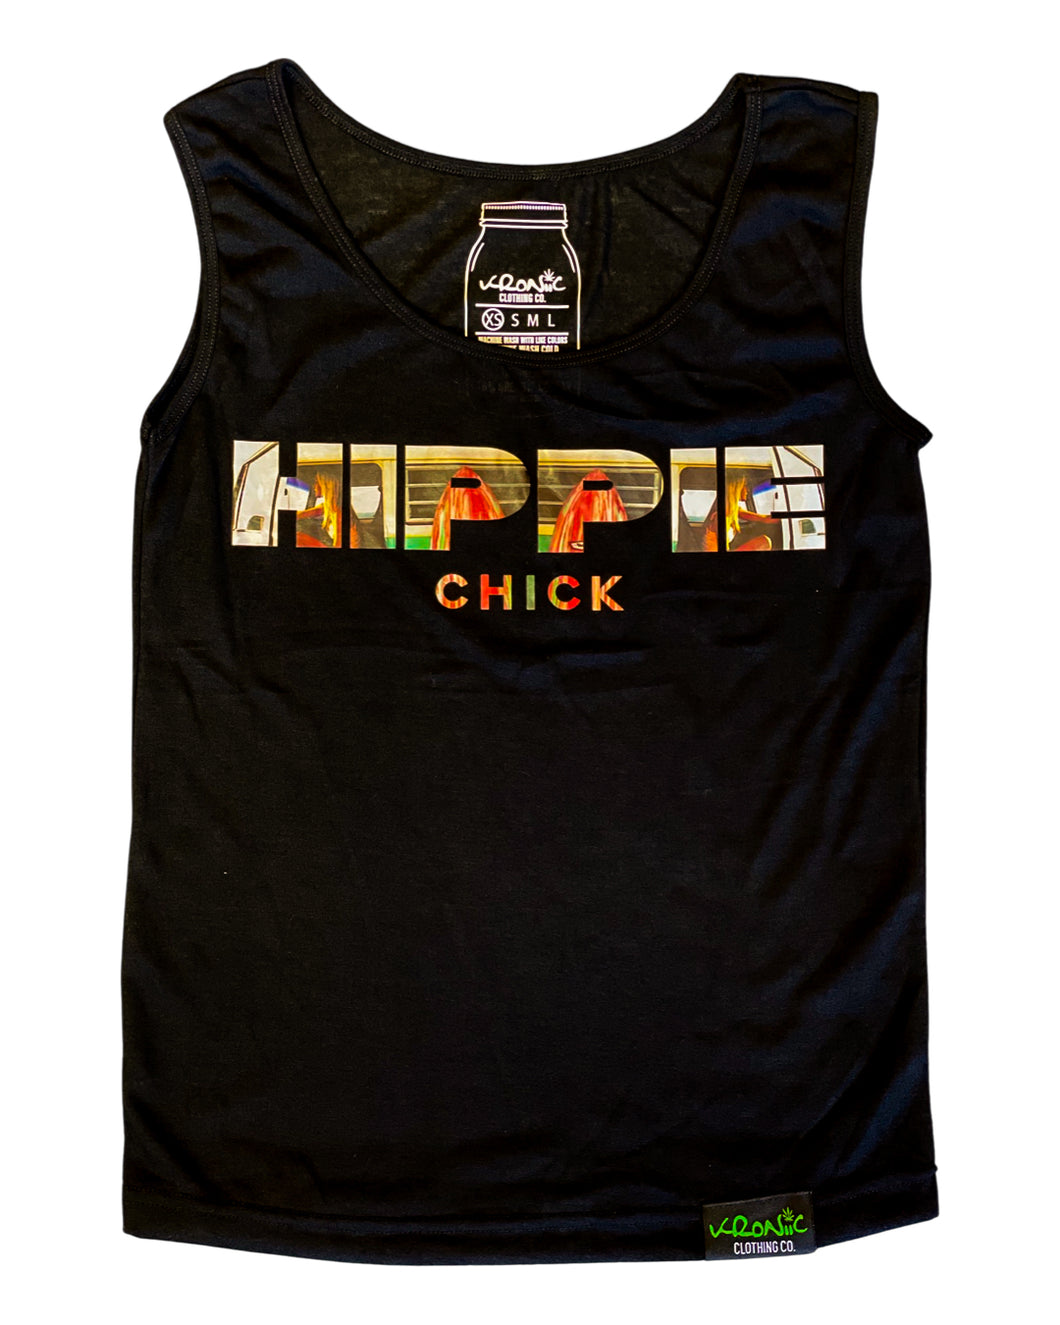 Kroniic Clothing Hippie Chick Women's Hemp Tank Top.